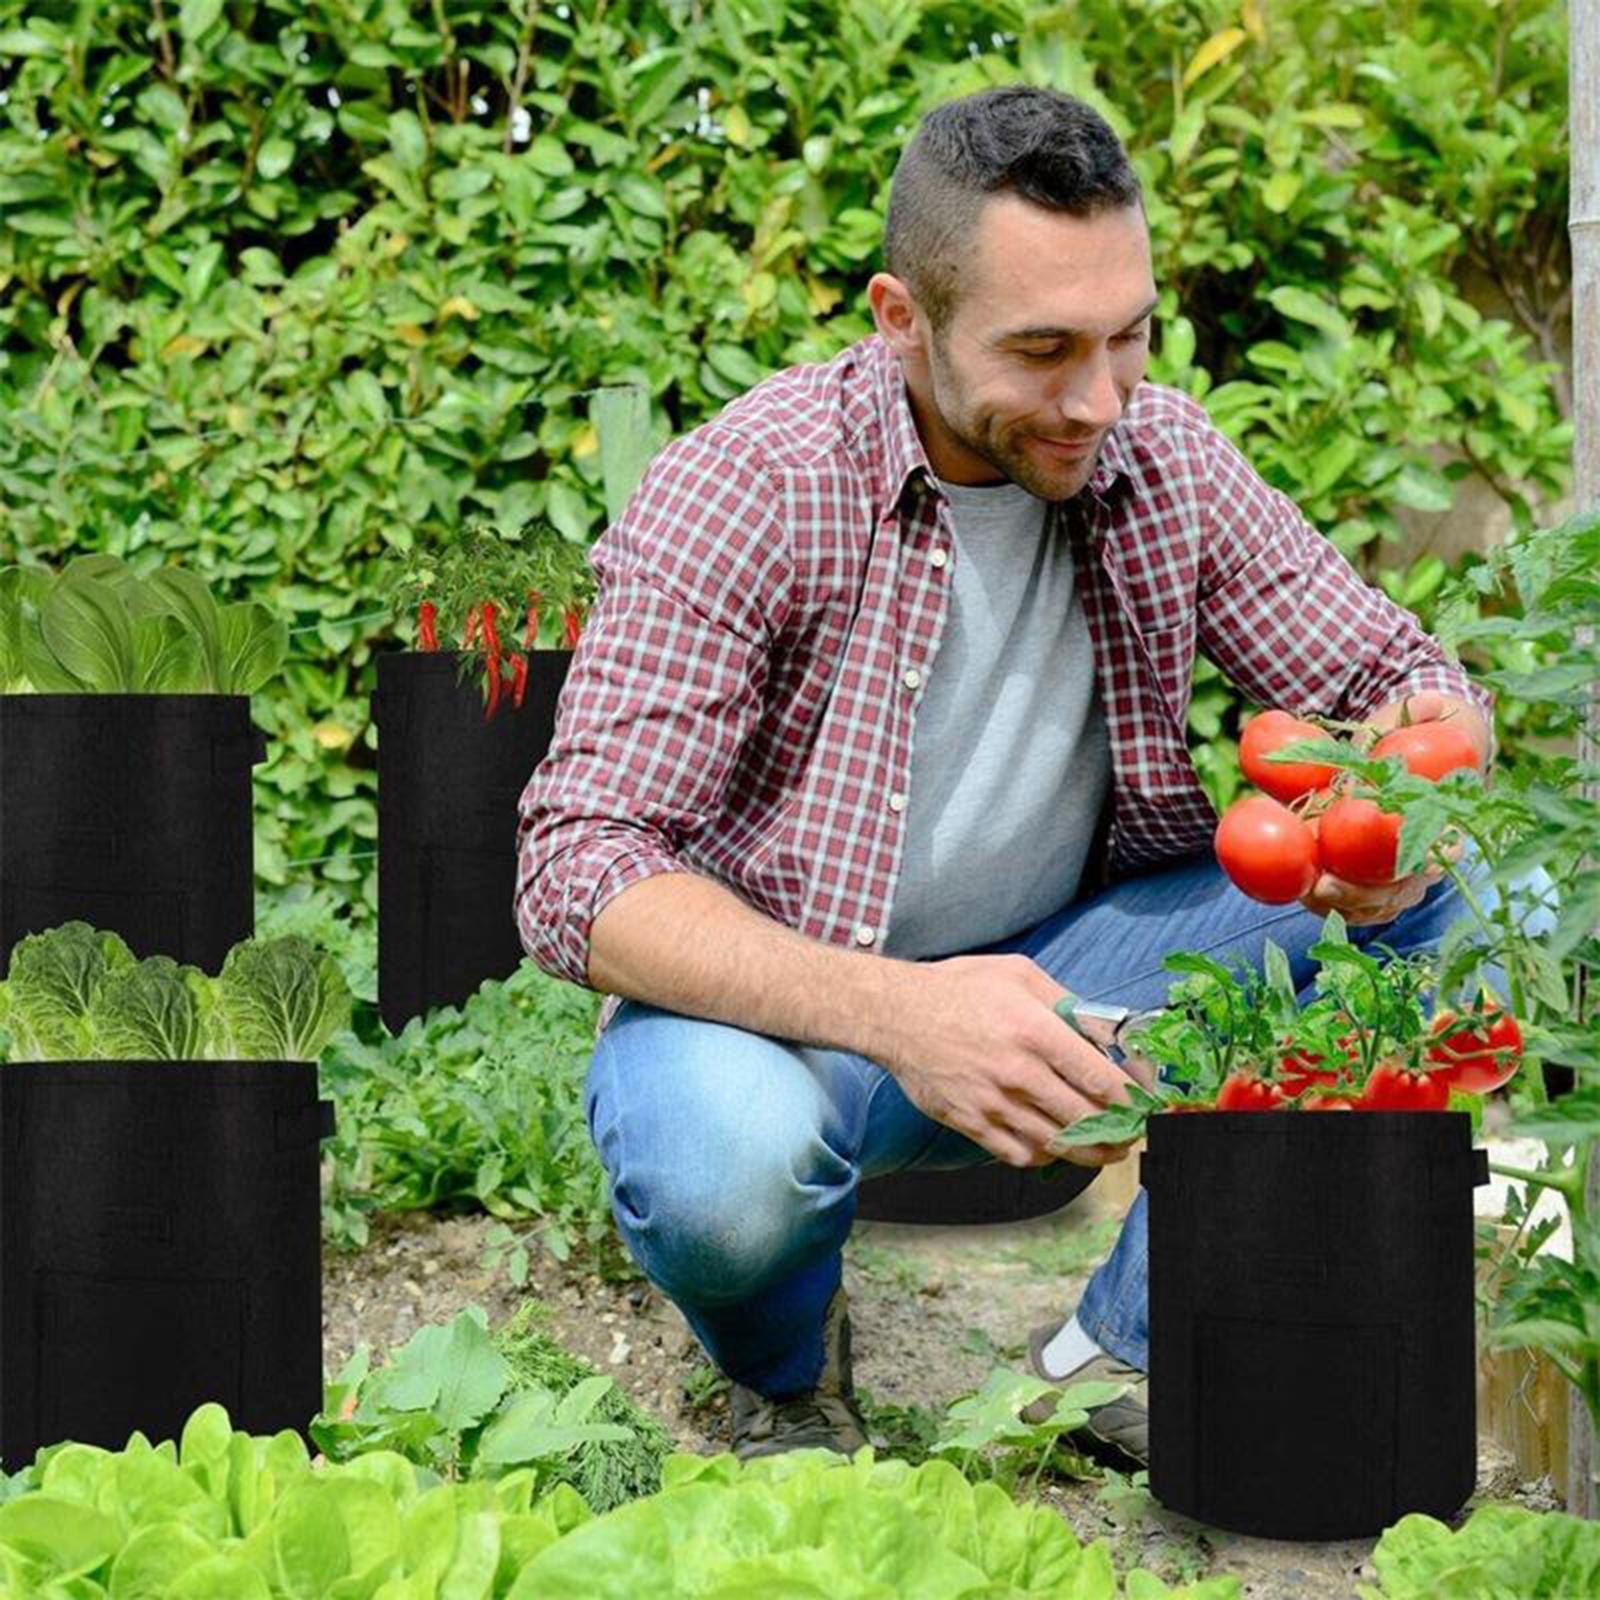 Plant Grow Bags for Potato Fruit Stewberry Vegetable Garden Reusable Brown